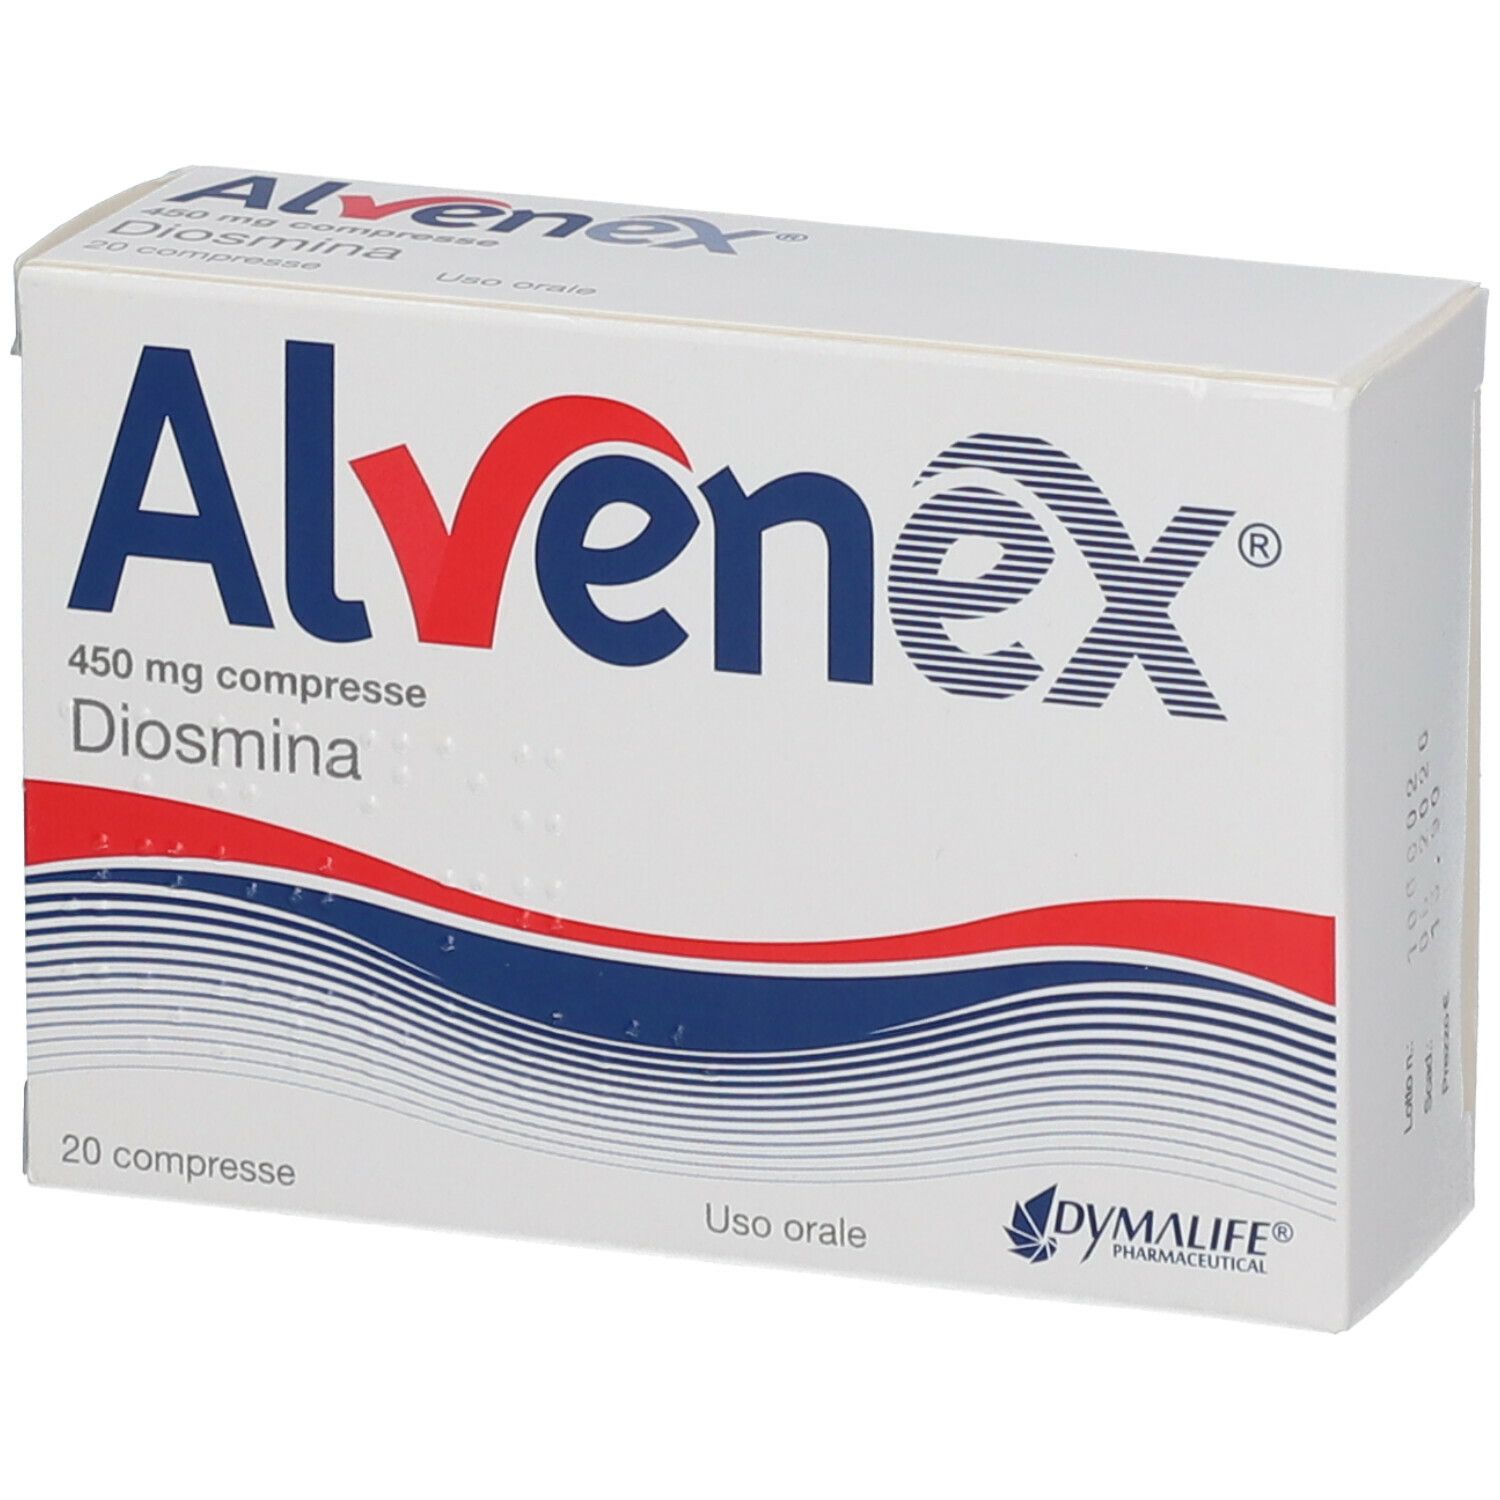 Alvenex® 450 mg Compresse